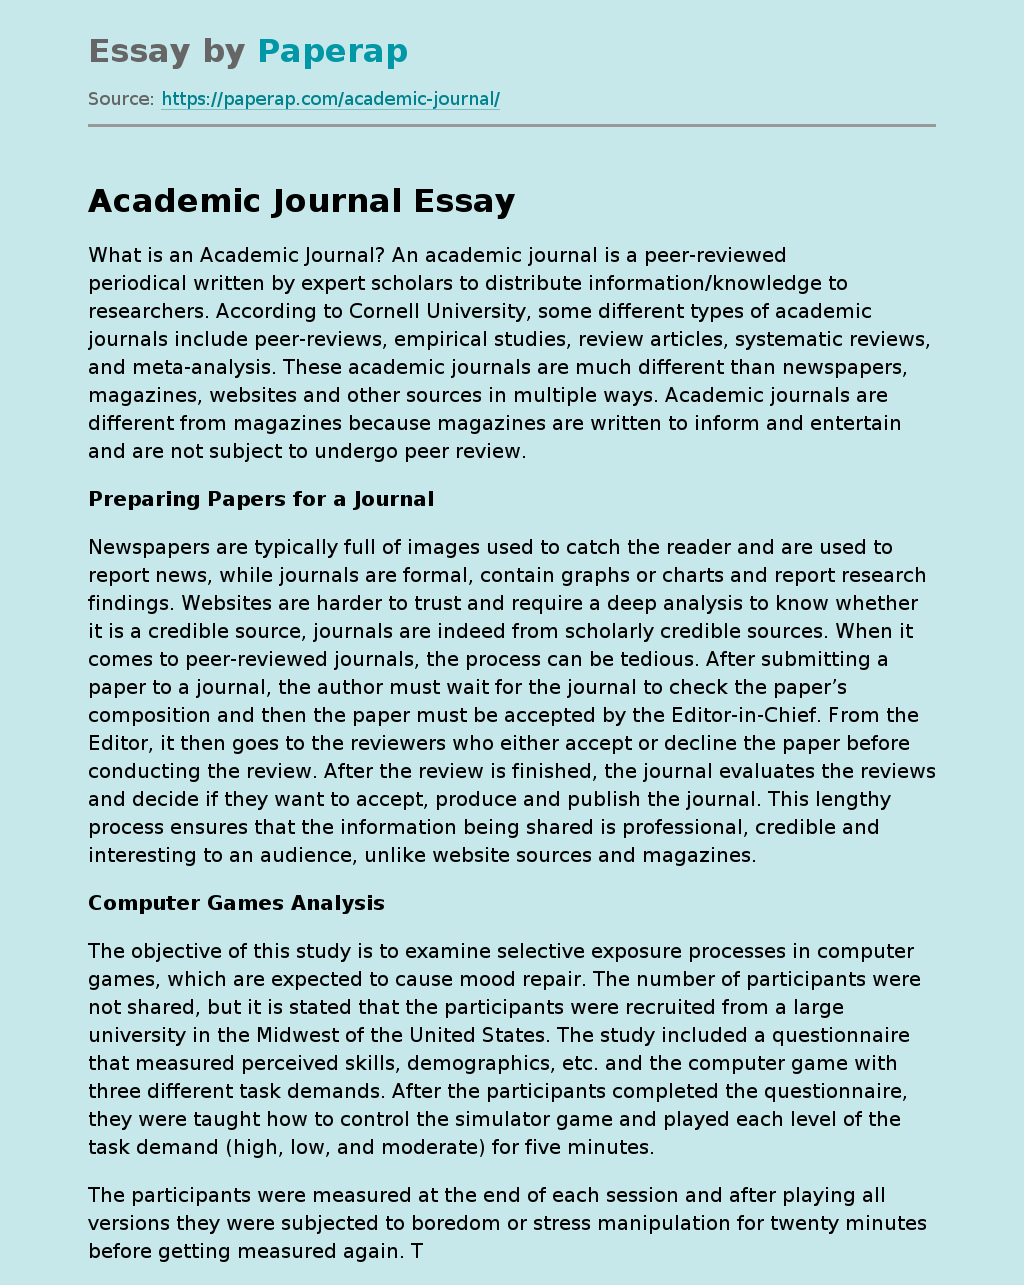 Academic Journal